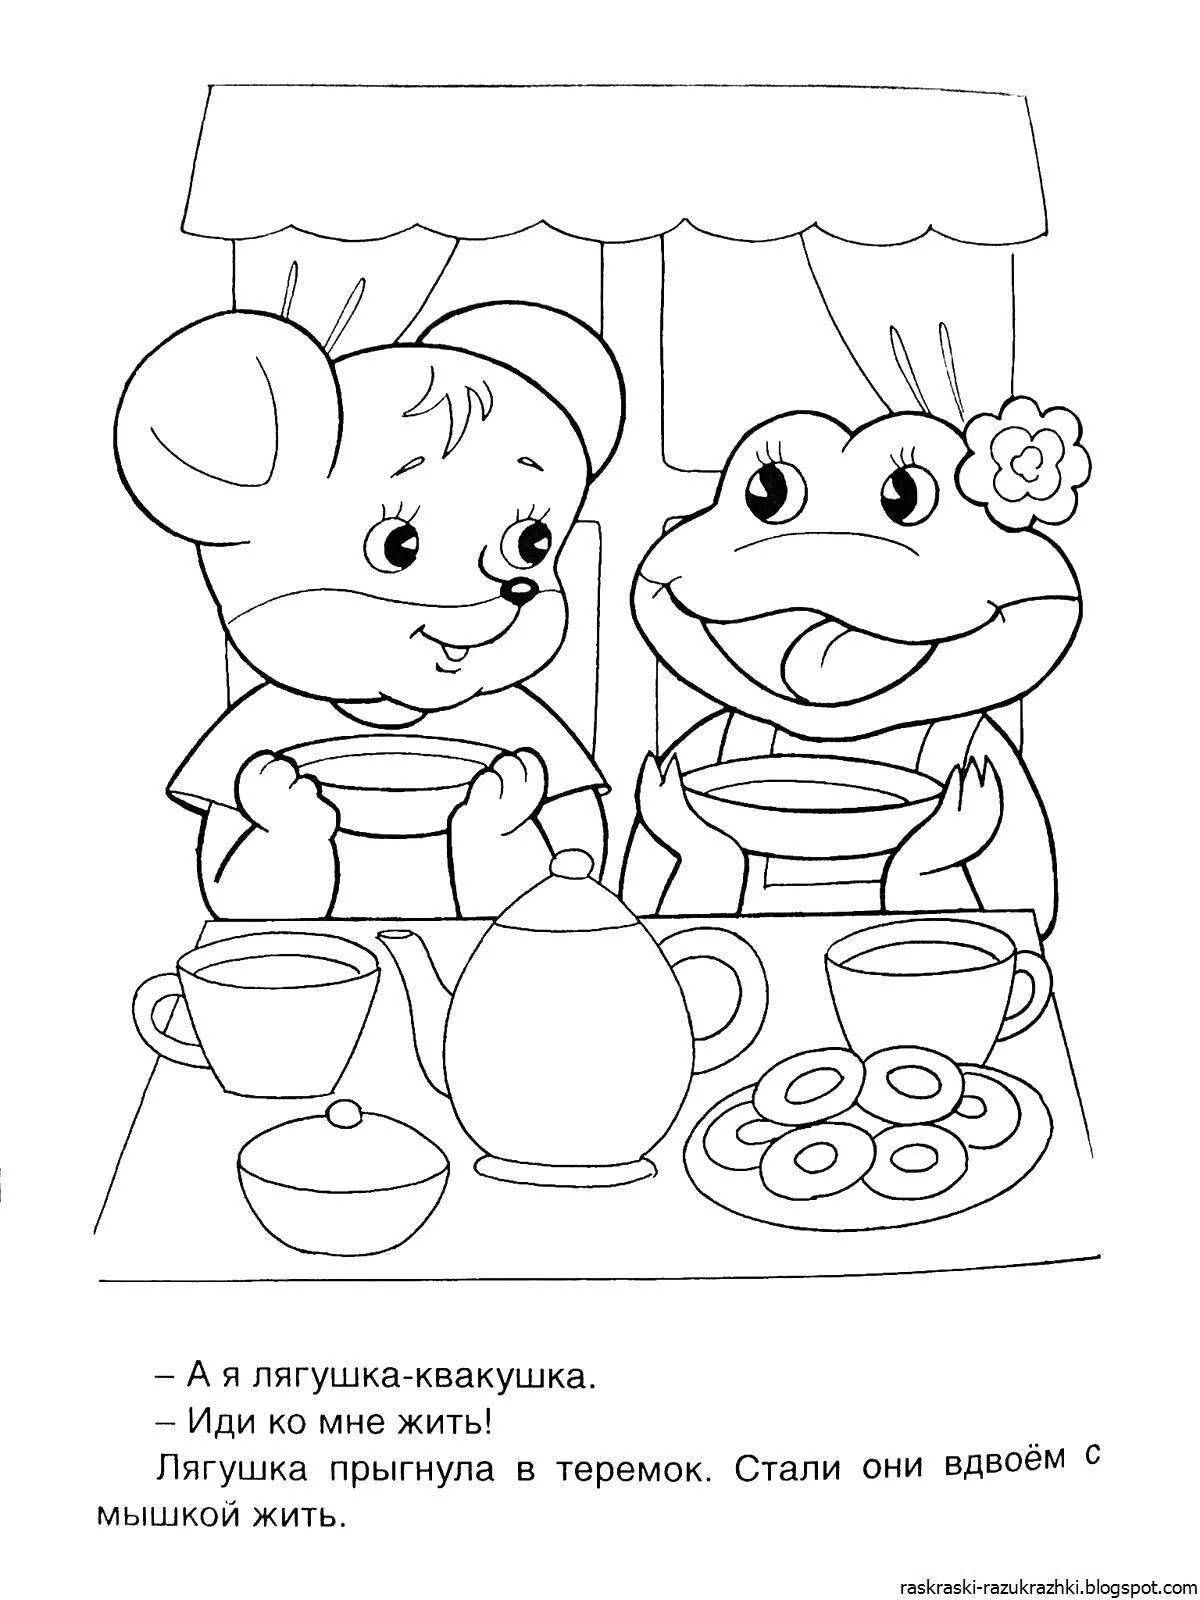 Joyful teremok coloring book for children 4-5 years old